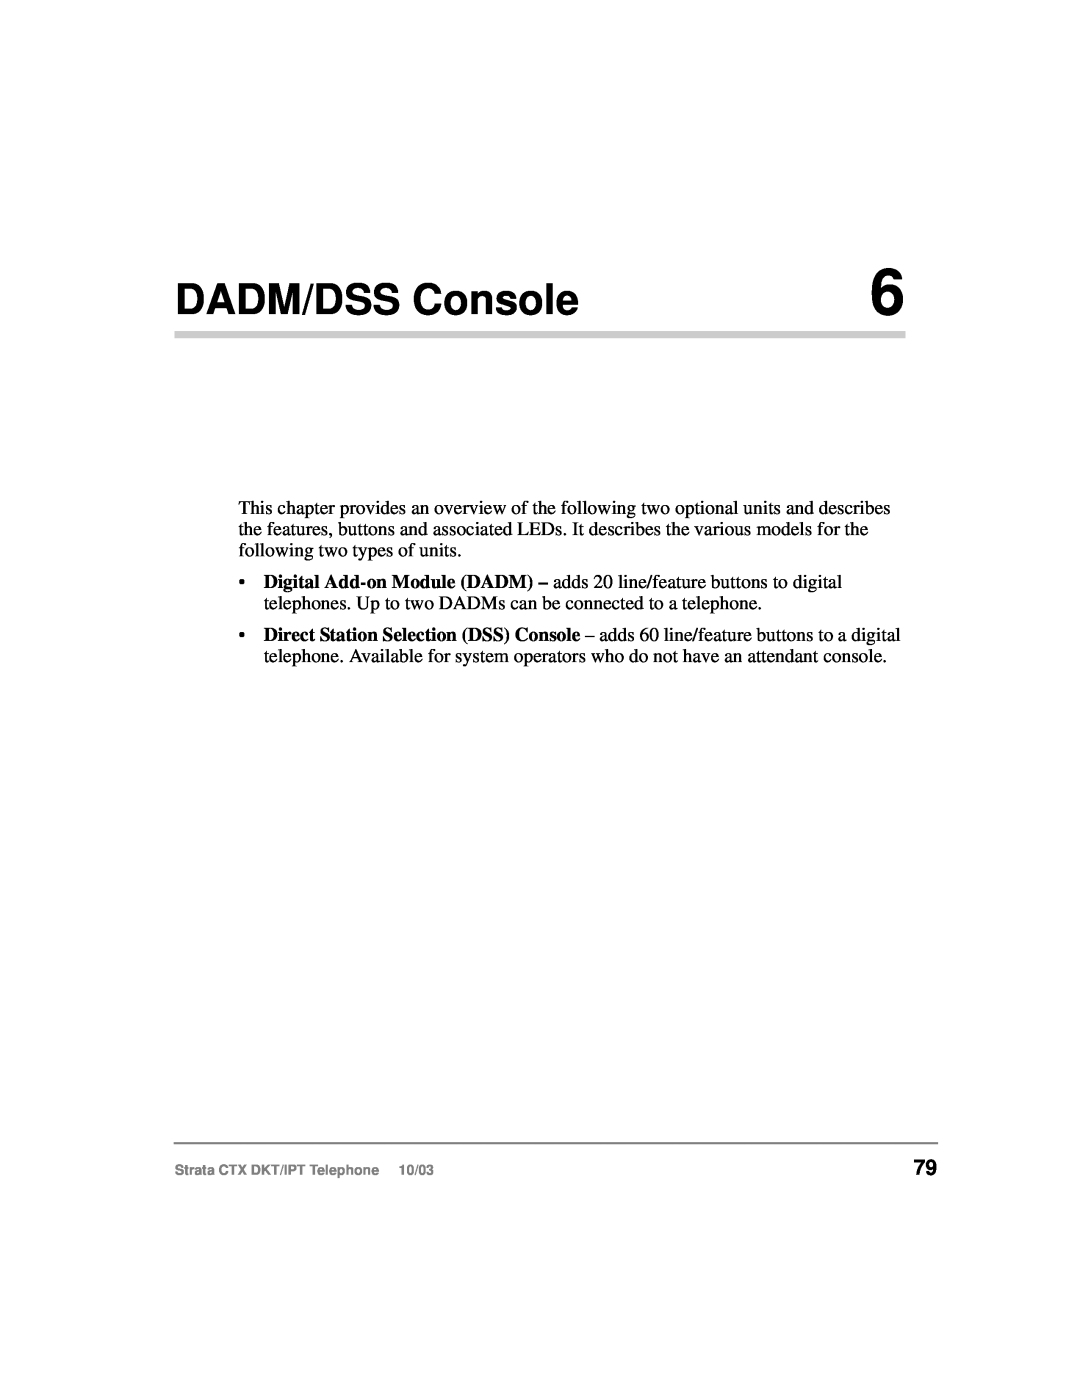 Toshiba DKT, IPT manual DADM/DSS Console 